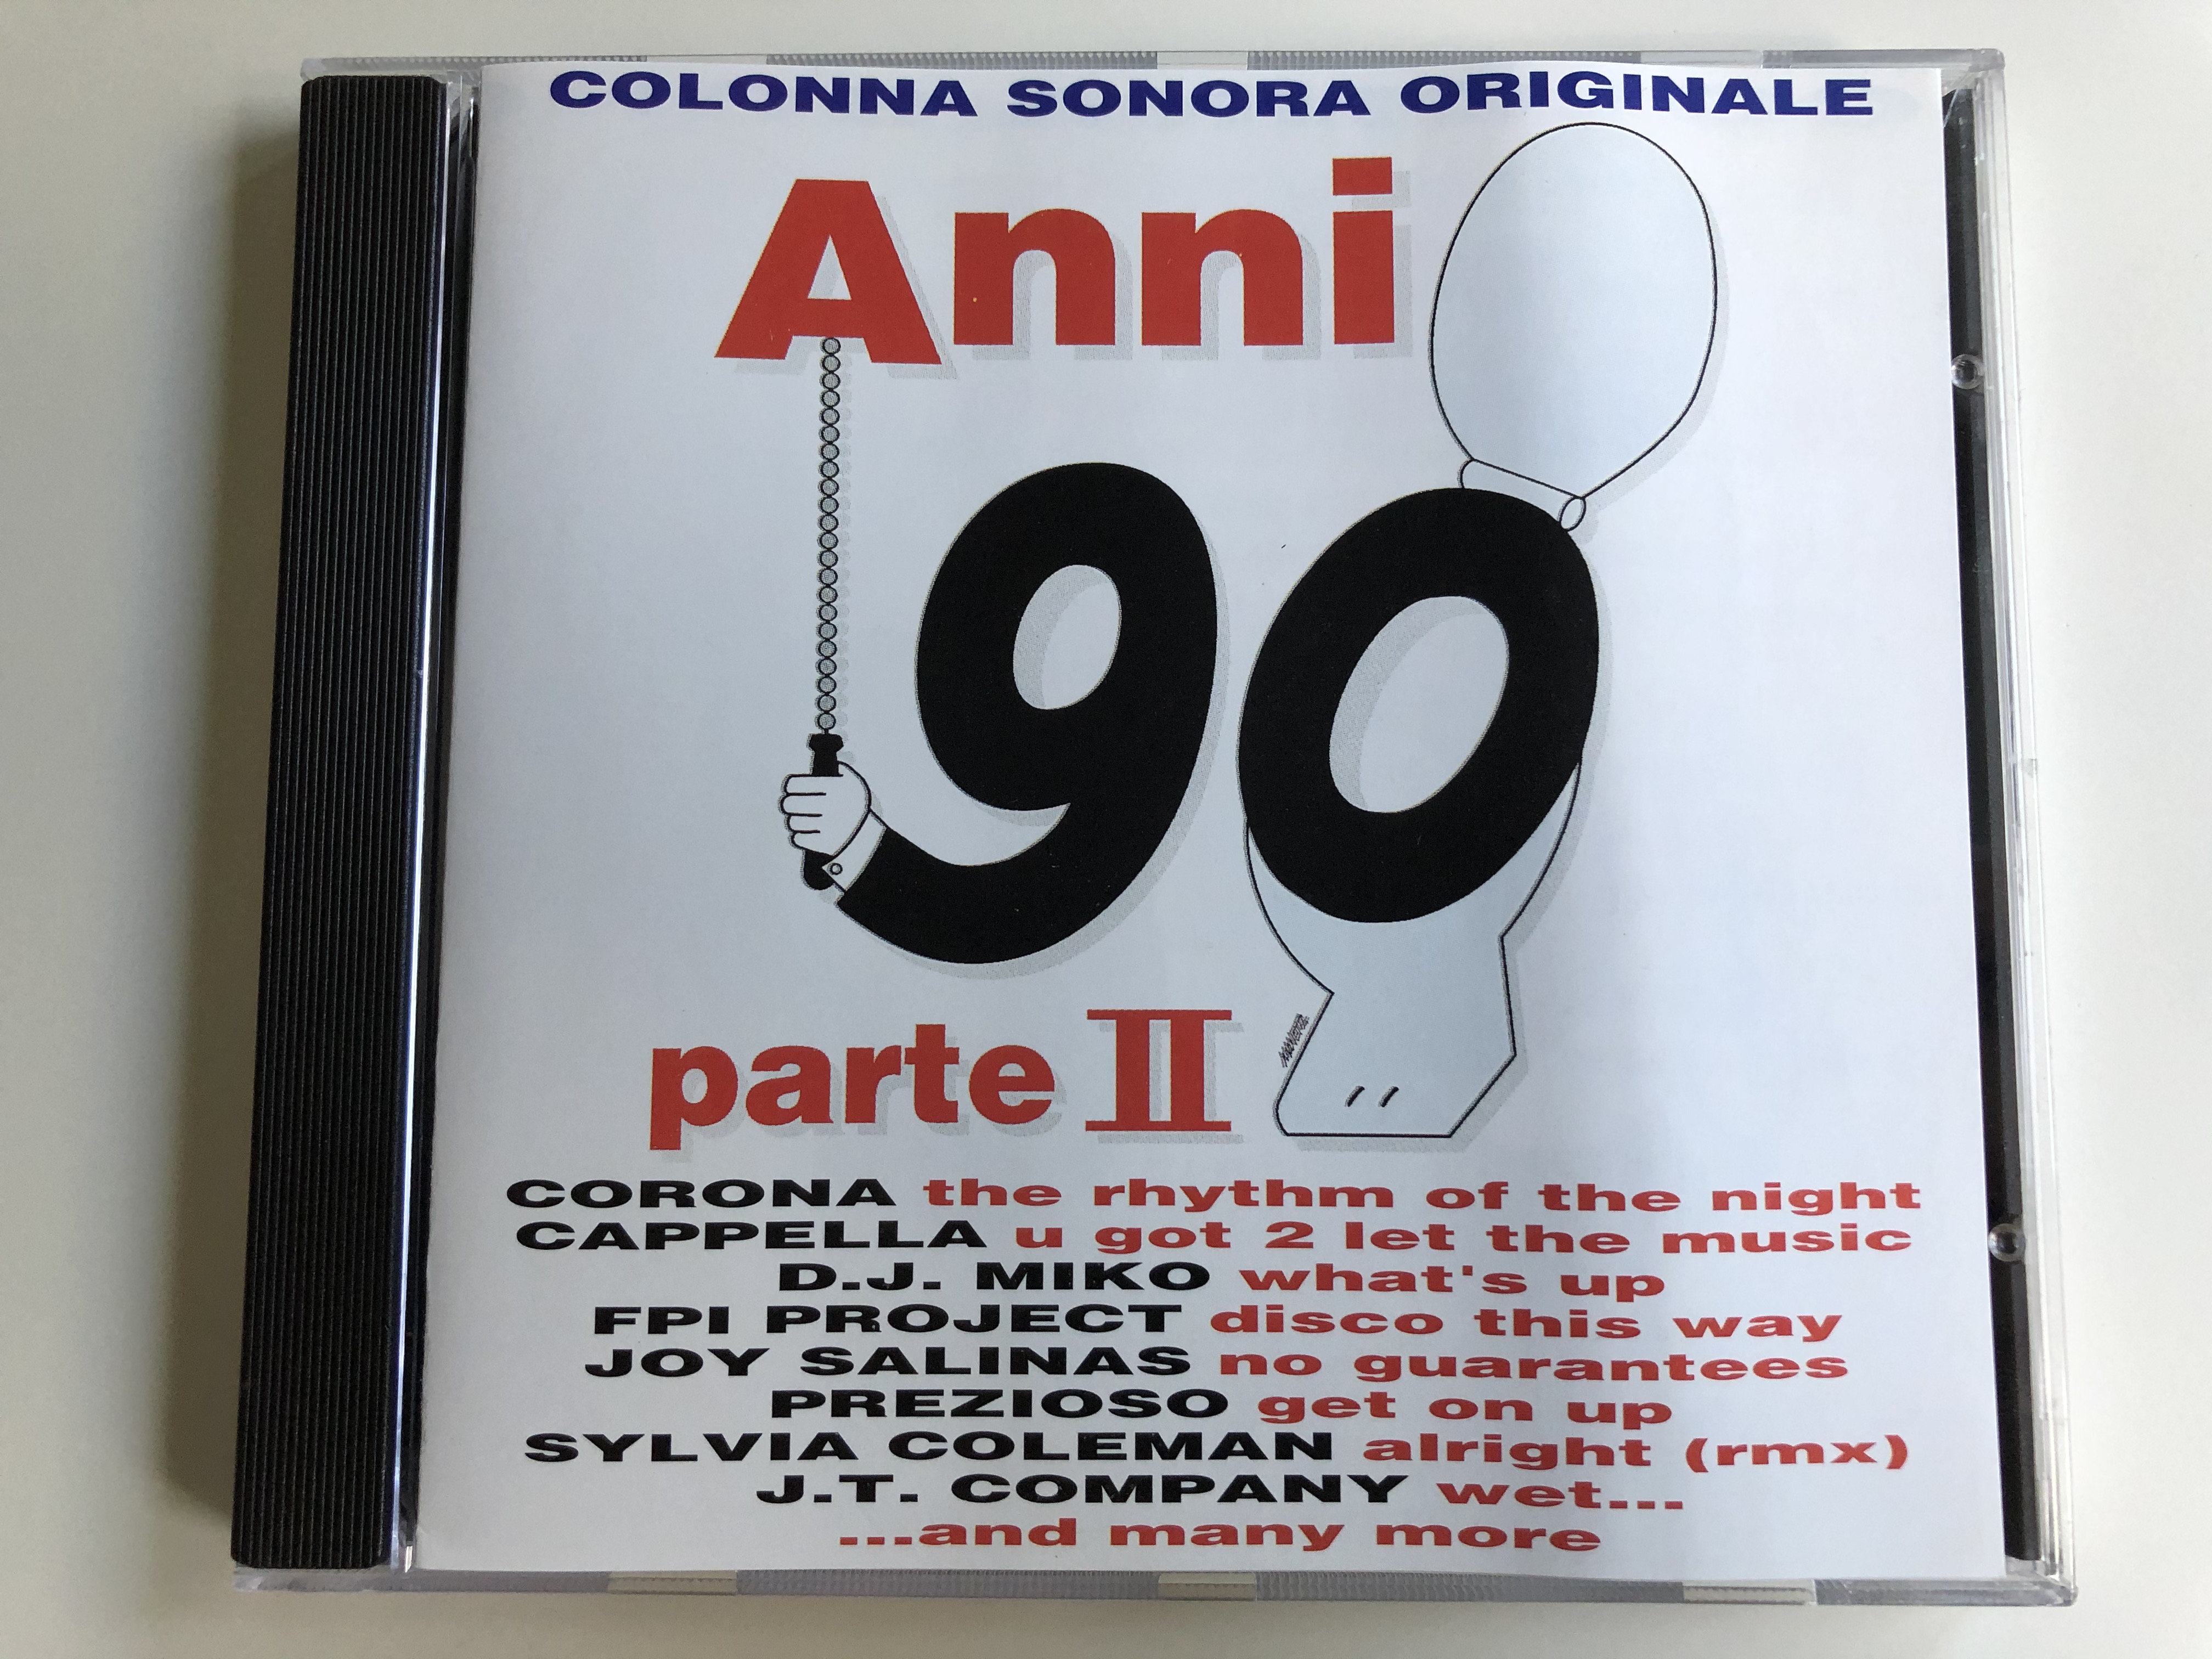 anni-90-parte-ii-colonna-sonora-originale-corona-the-rhythm-of-the-night-cappella-u-got-2-let-the-music-dj-miko-what-s-up-fpi-project-disco-this-way-joy-salinas-no-guarantees-prez-1-.jpg